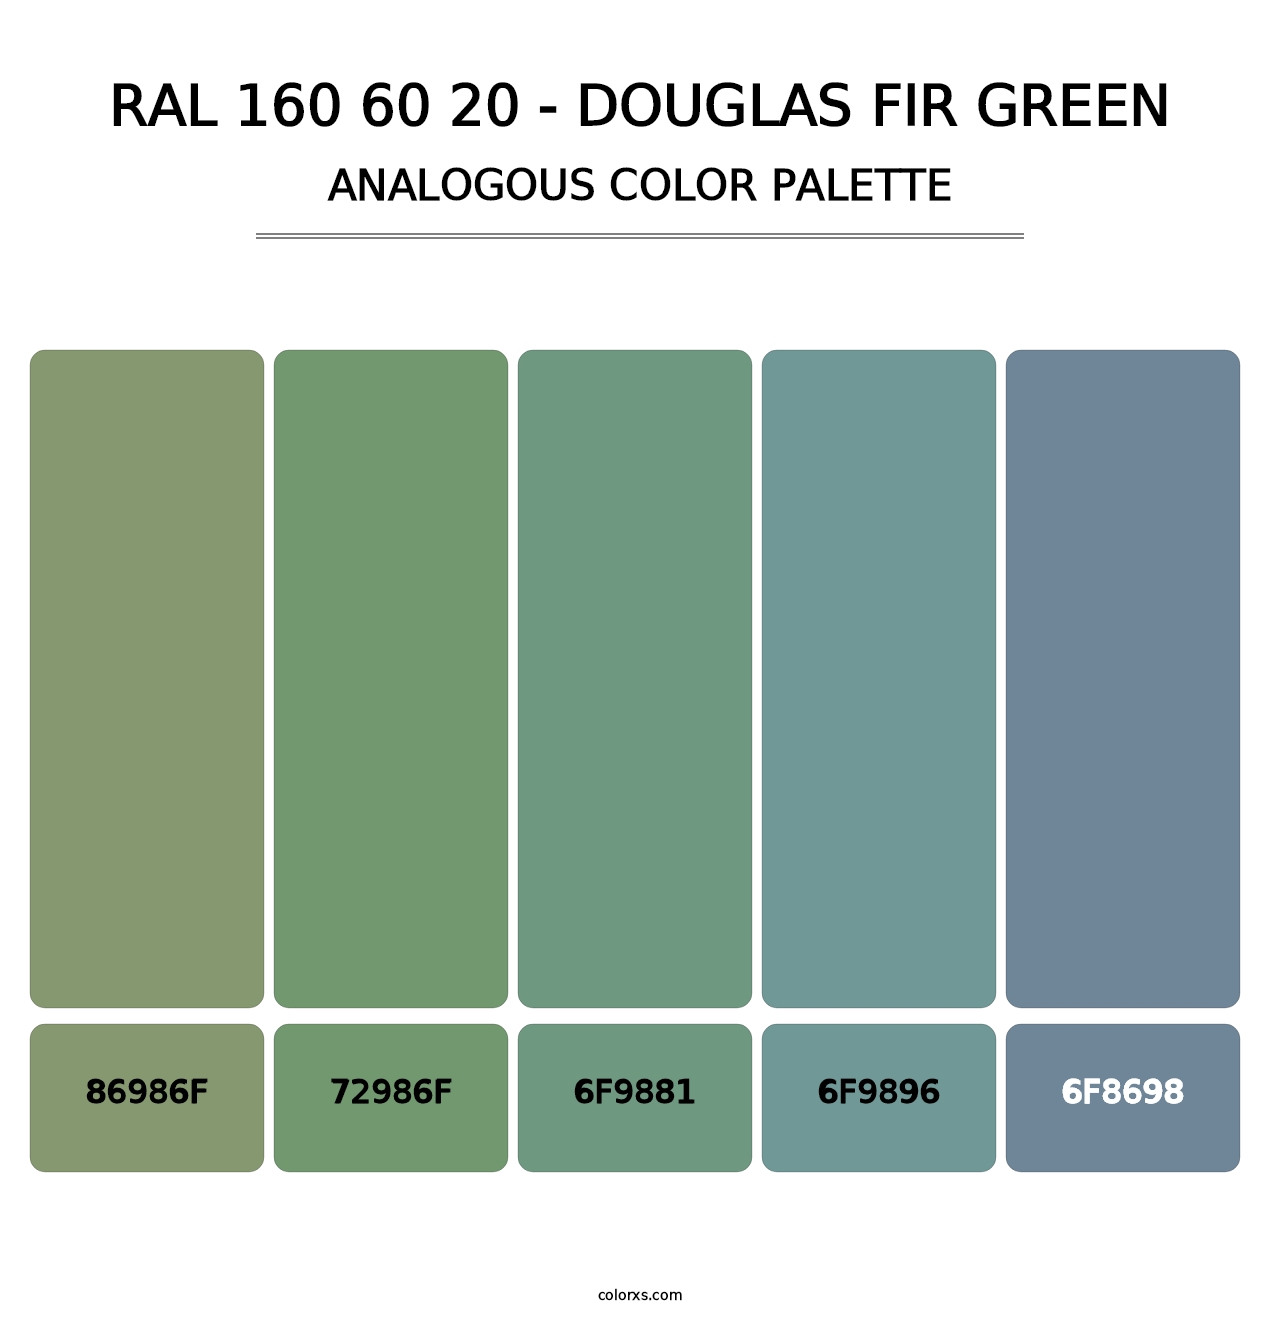 RAL 160 60 20 - Douglas Fir Green - Analogous Color Palette